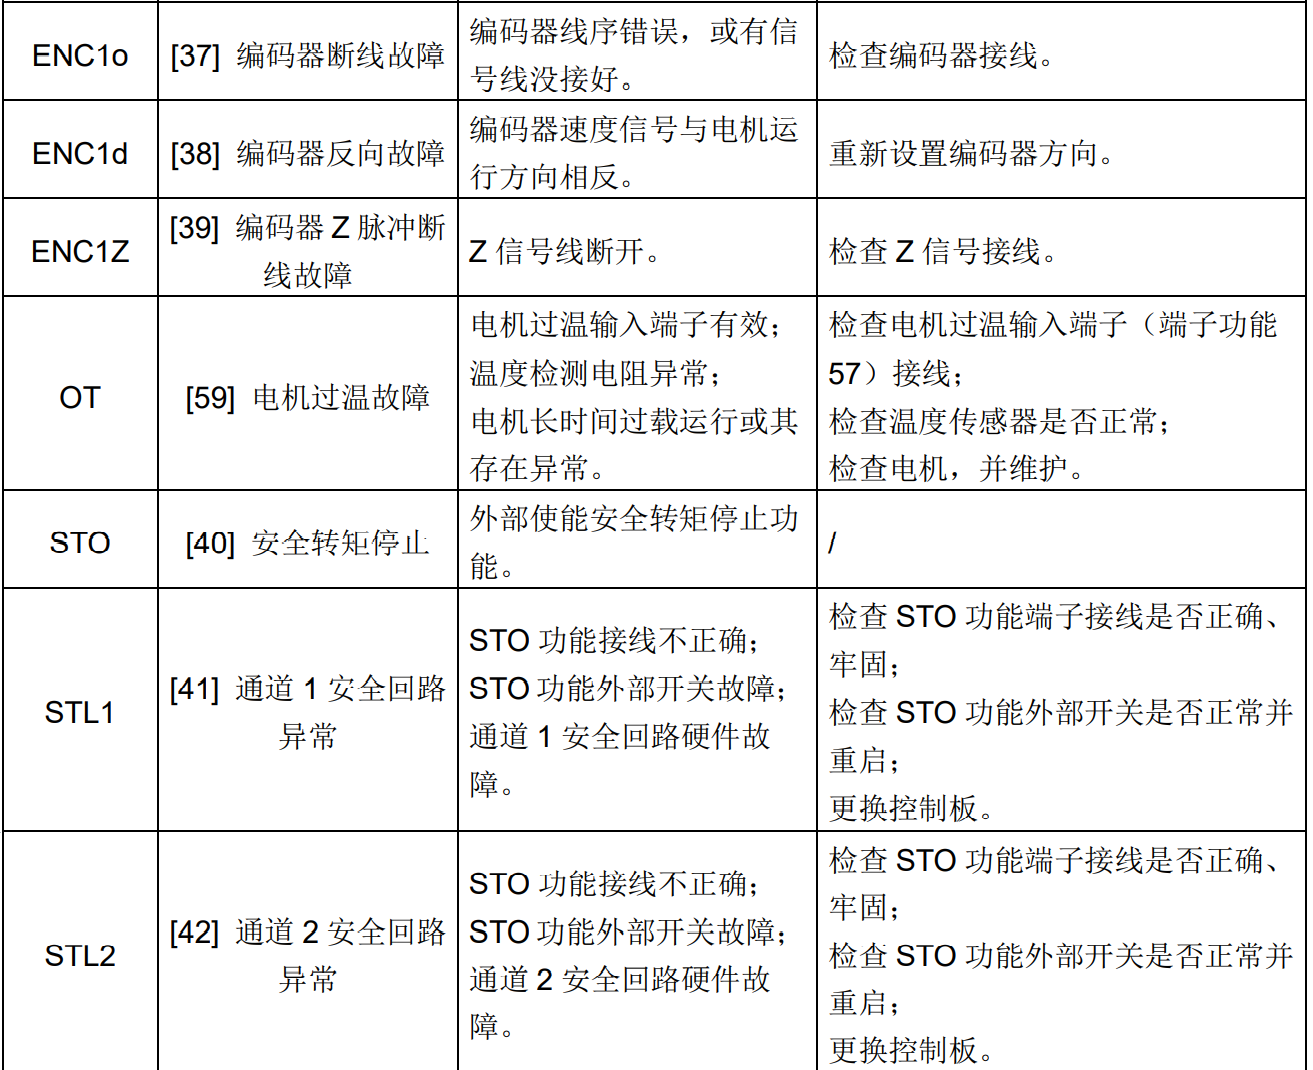 GD350系列⾼性能多功能变频器故障代码 ENC1o、ENC1d、ENC1z、OT、STO、STL1、STL2